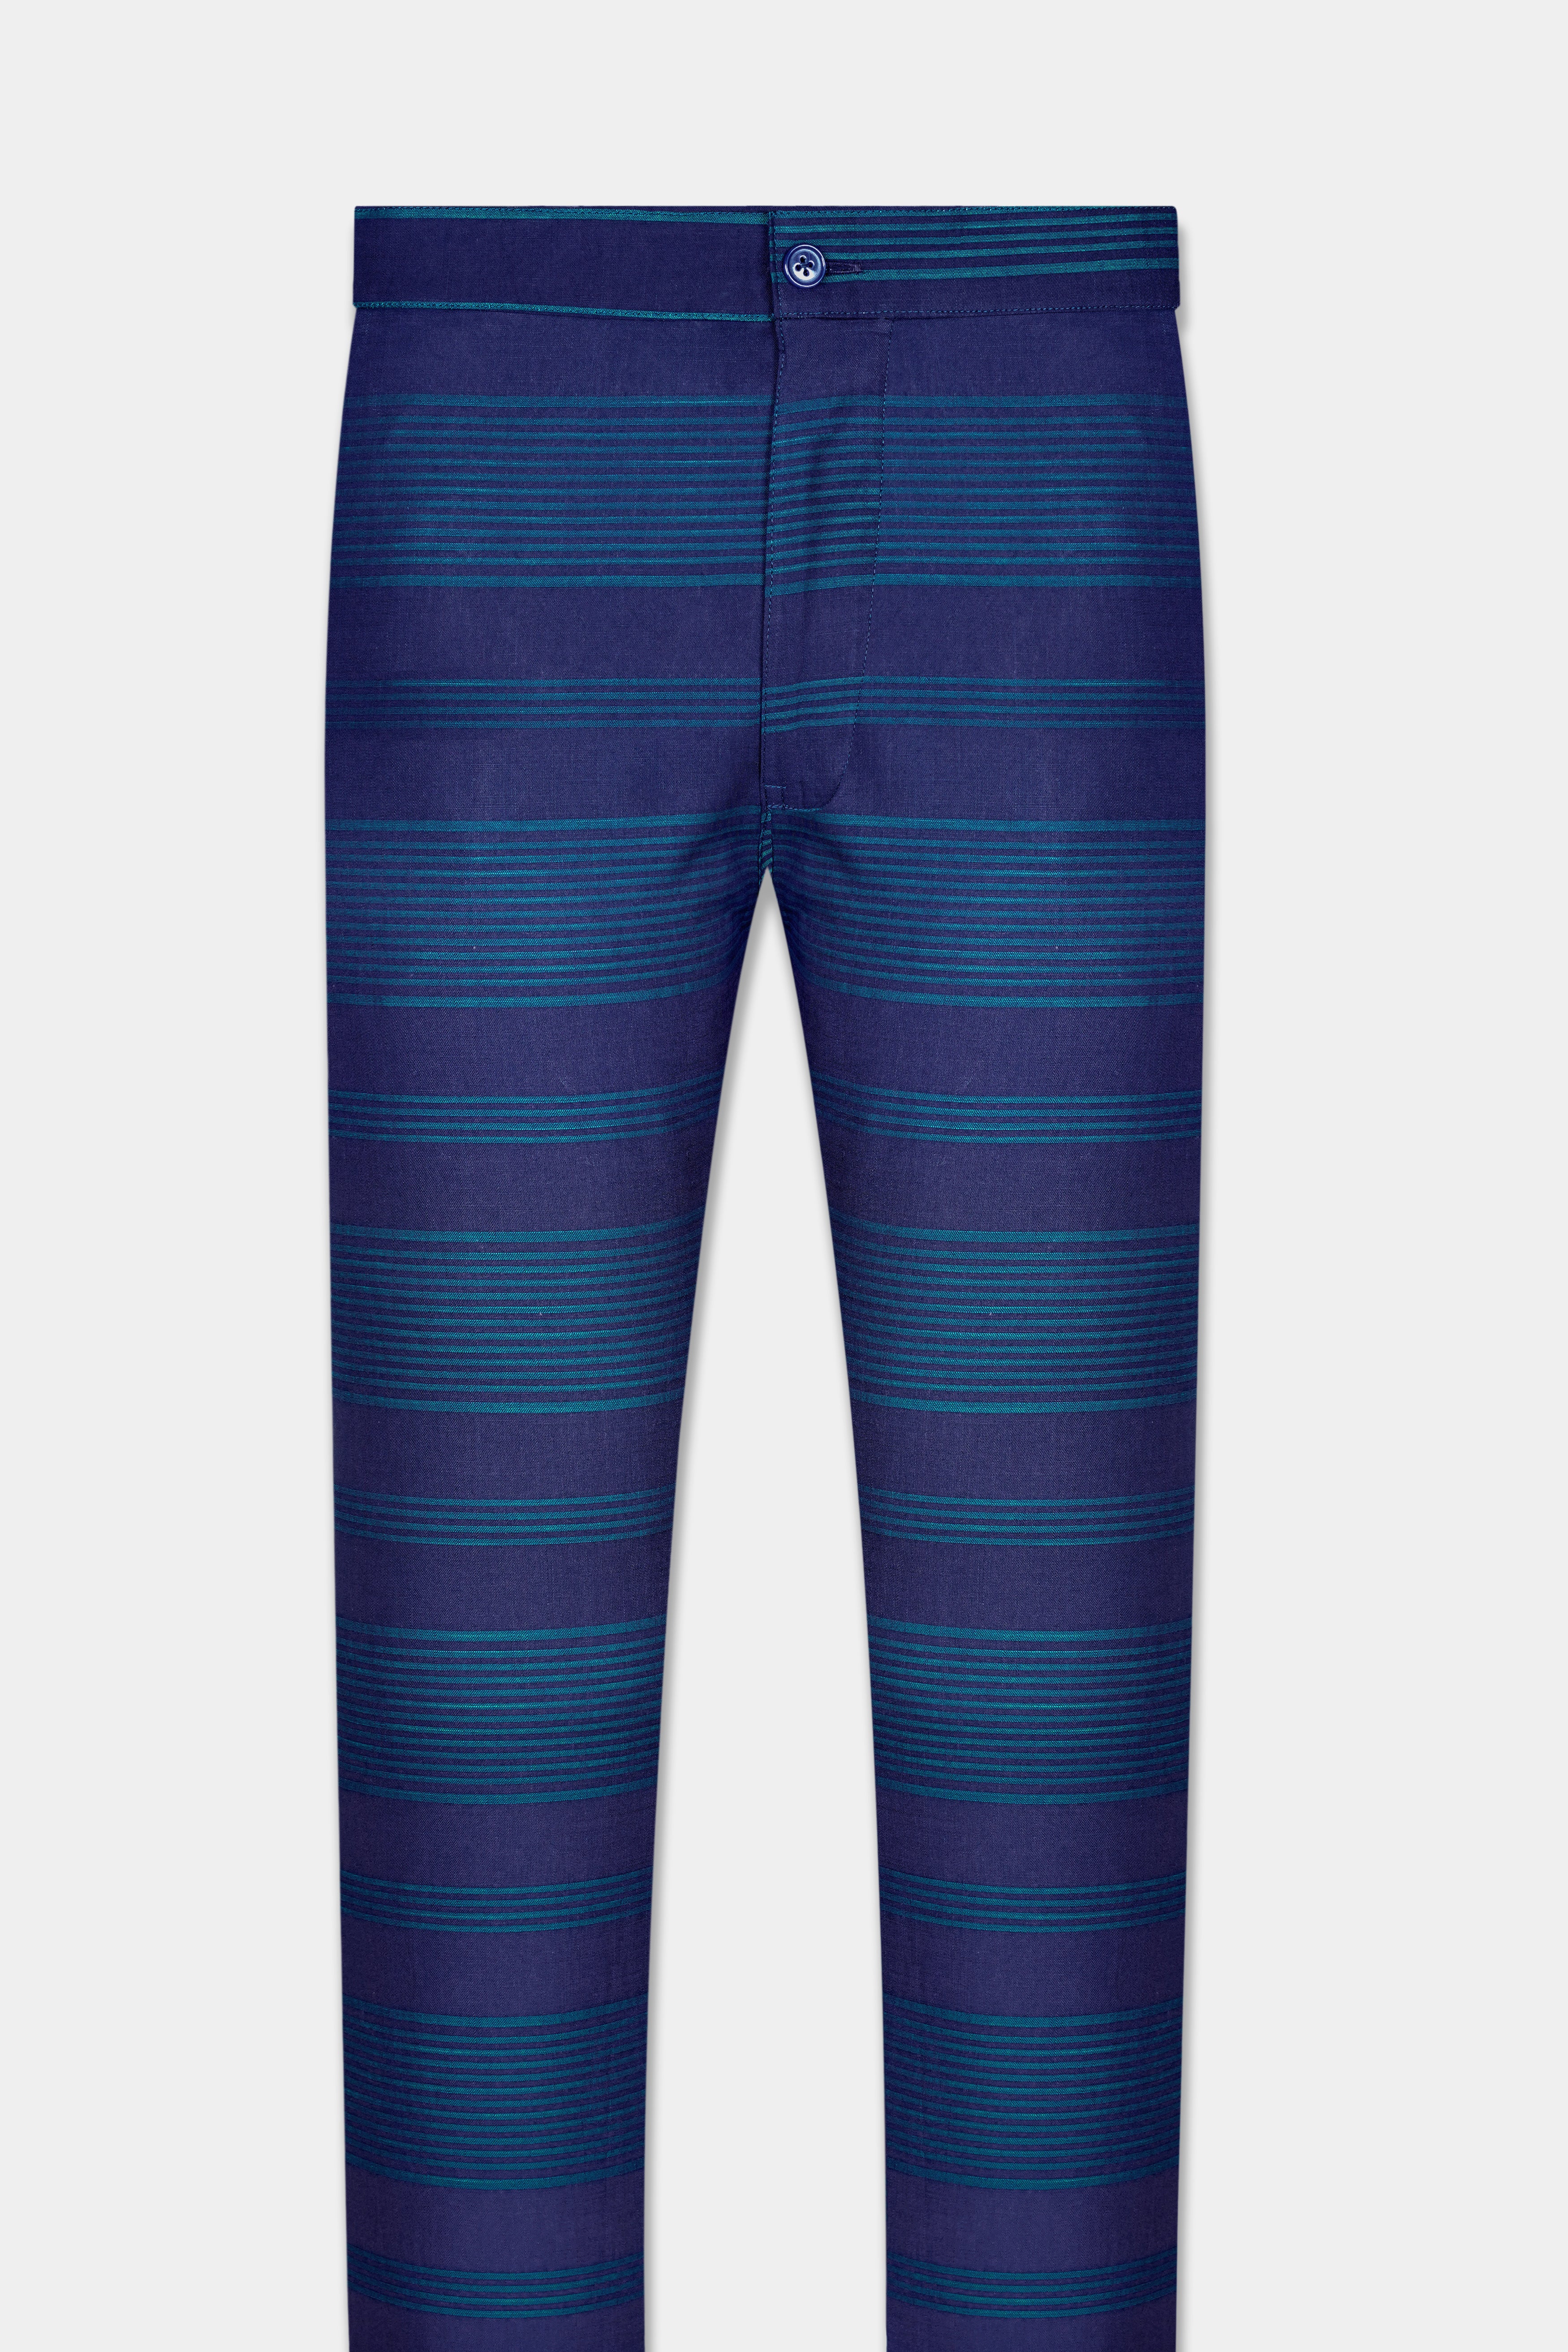 Violent Blue and Cyan Horizontal Striped Oxford Cotton Lounge Pant